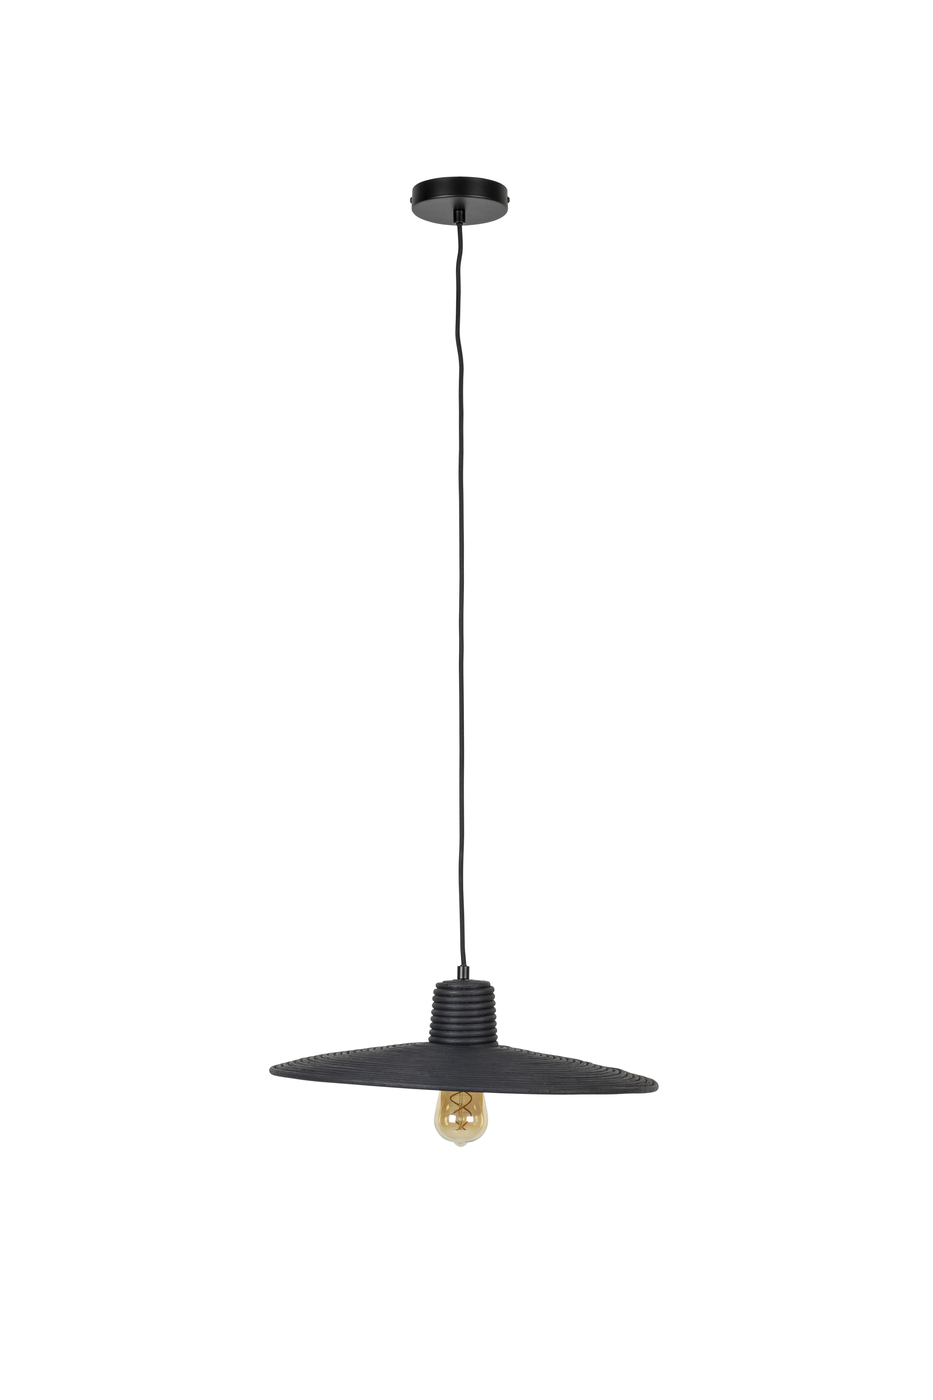 Darts Tenen antenne Zuiver Hanglamp Balance M Zwart kopen? ⏩ Giga Meubel! - Giga Meubel